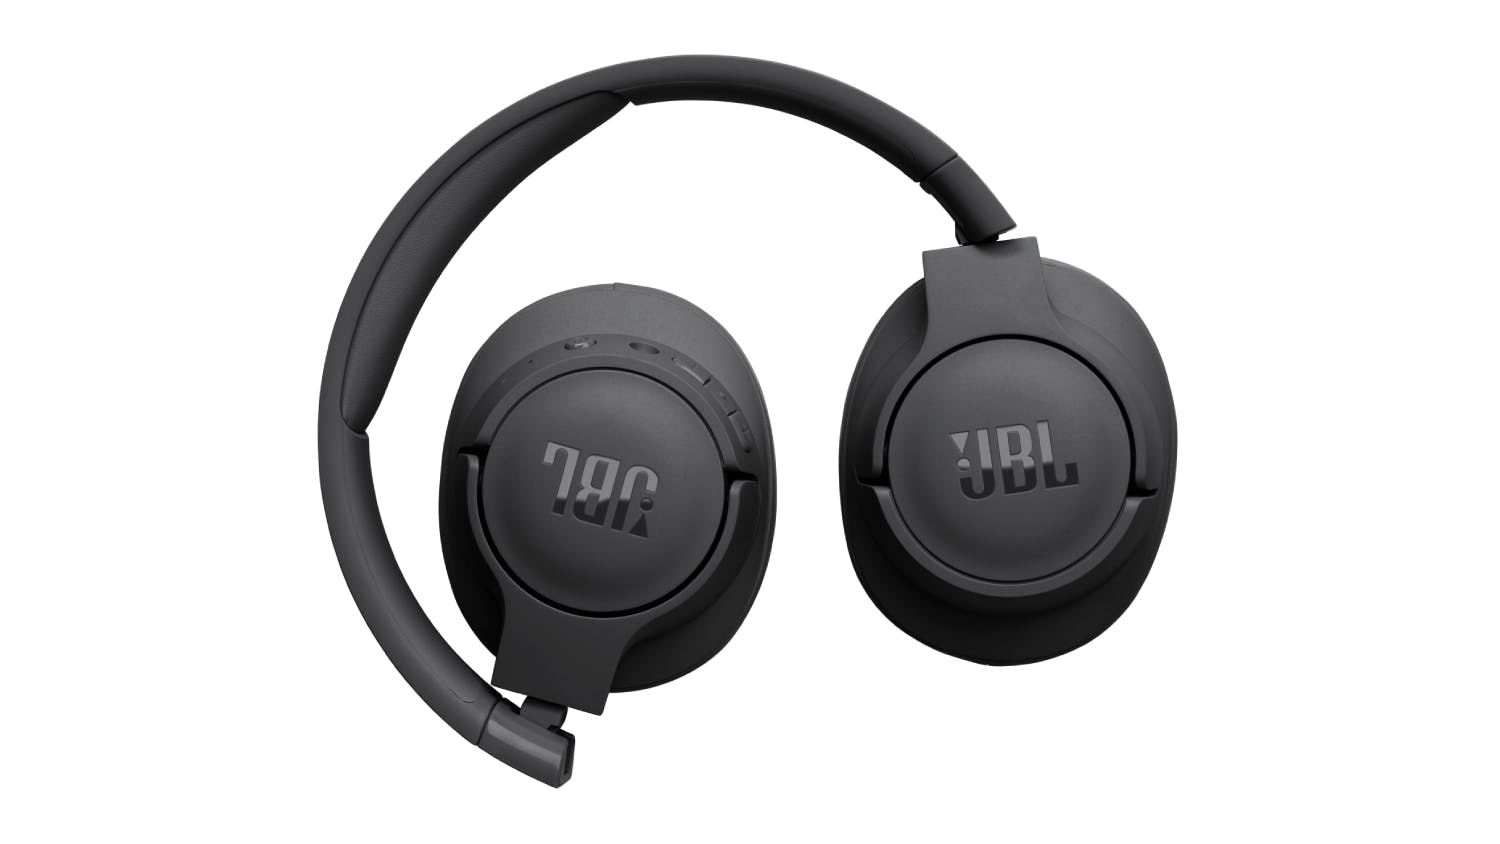 JBL Tune 720BT wireless around-ear headphones